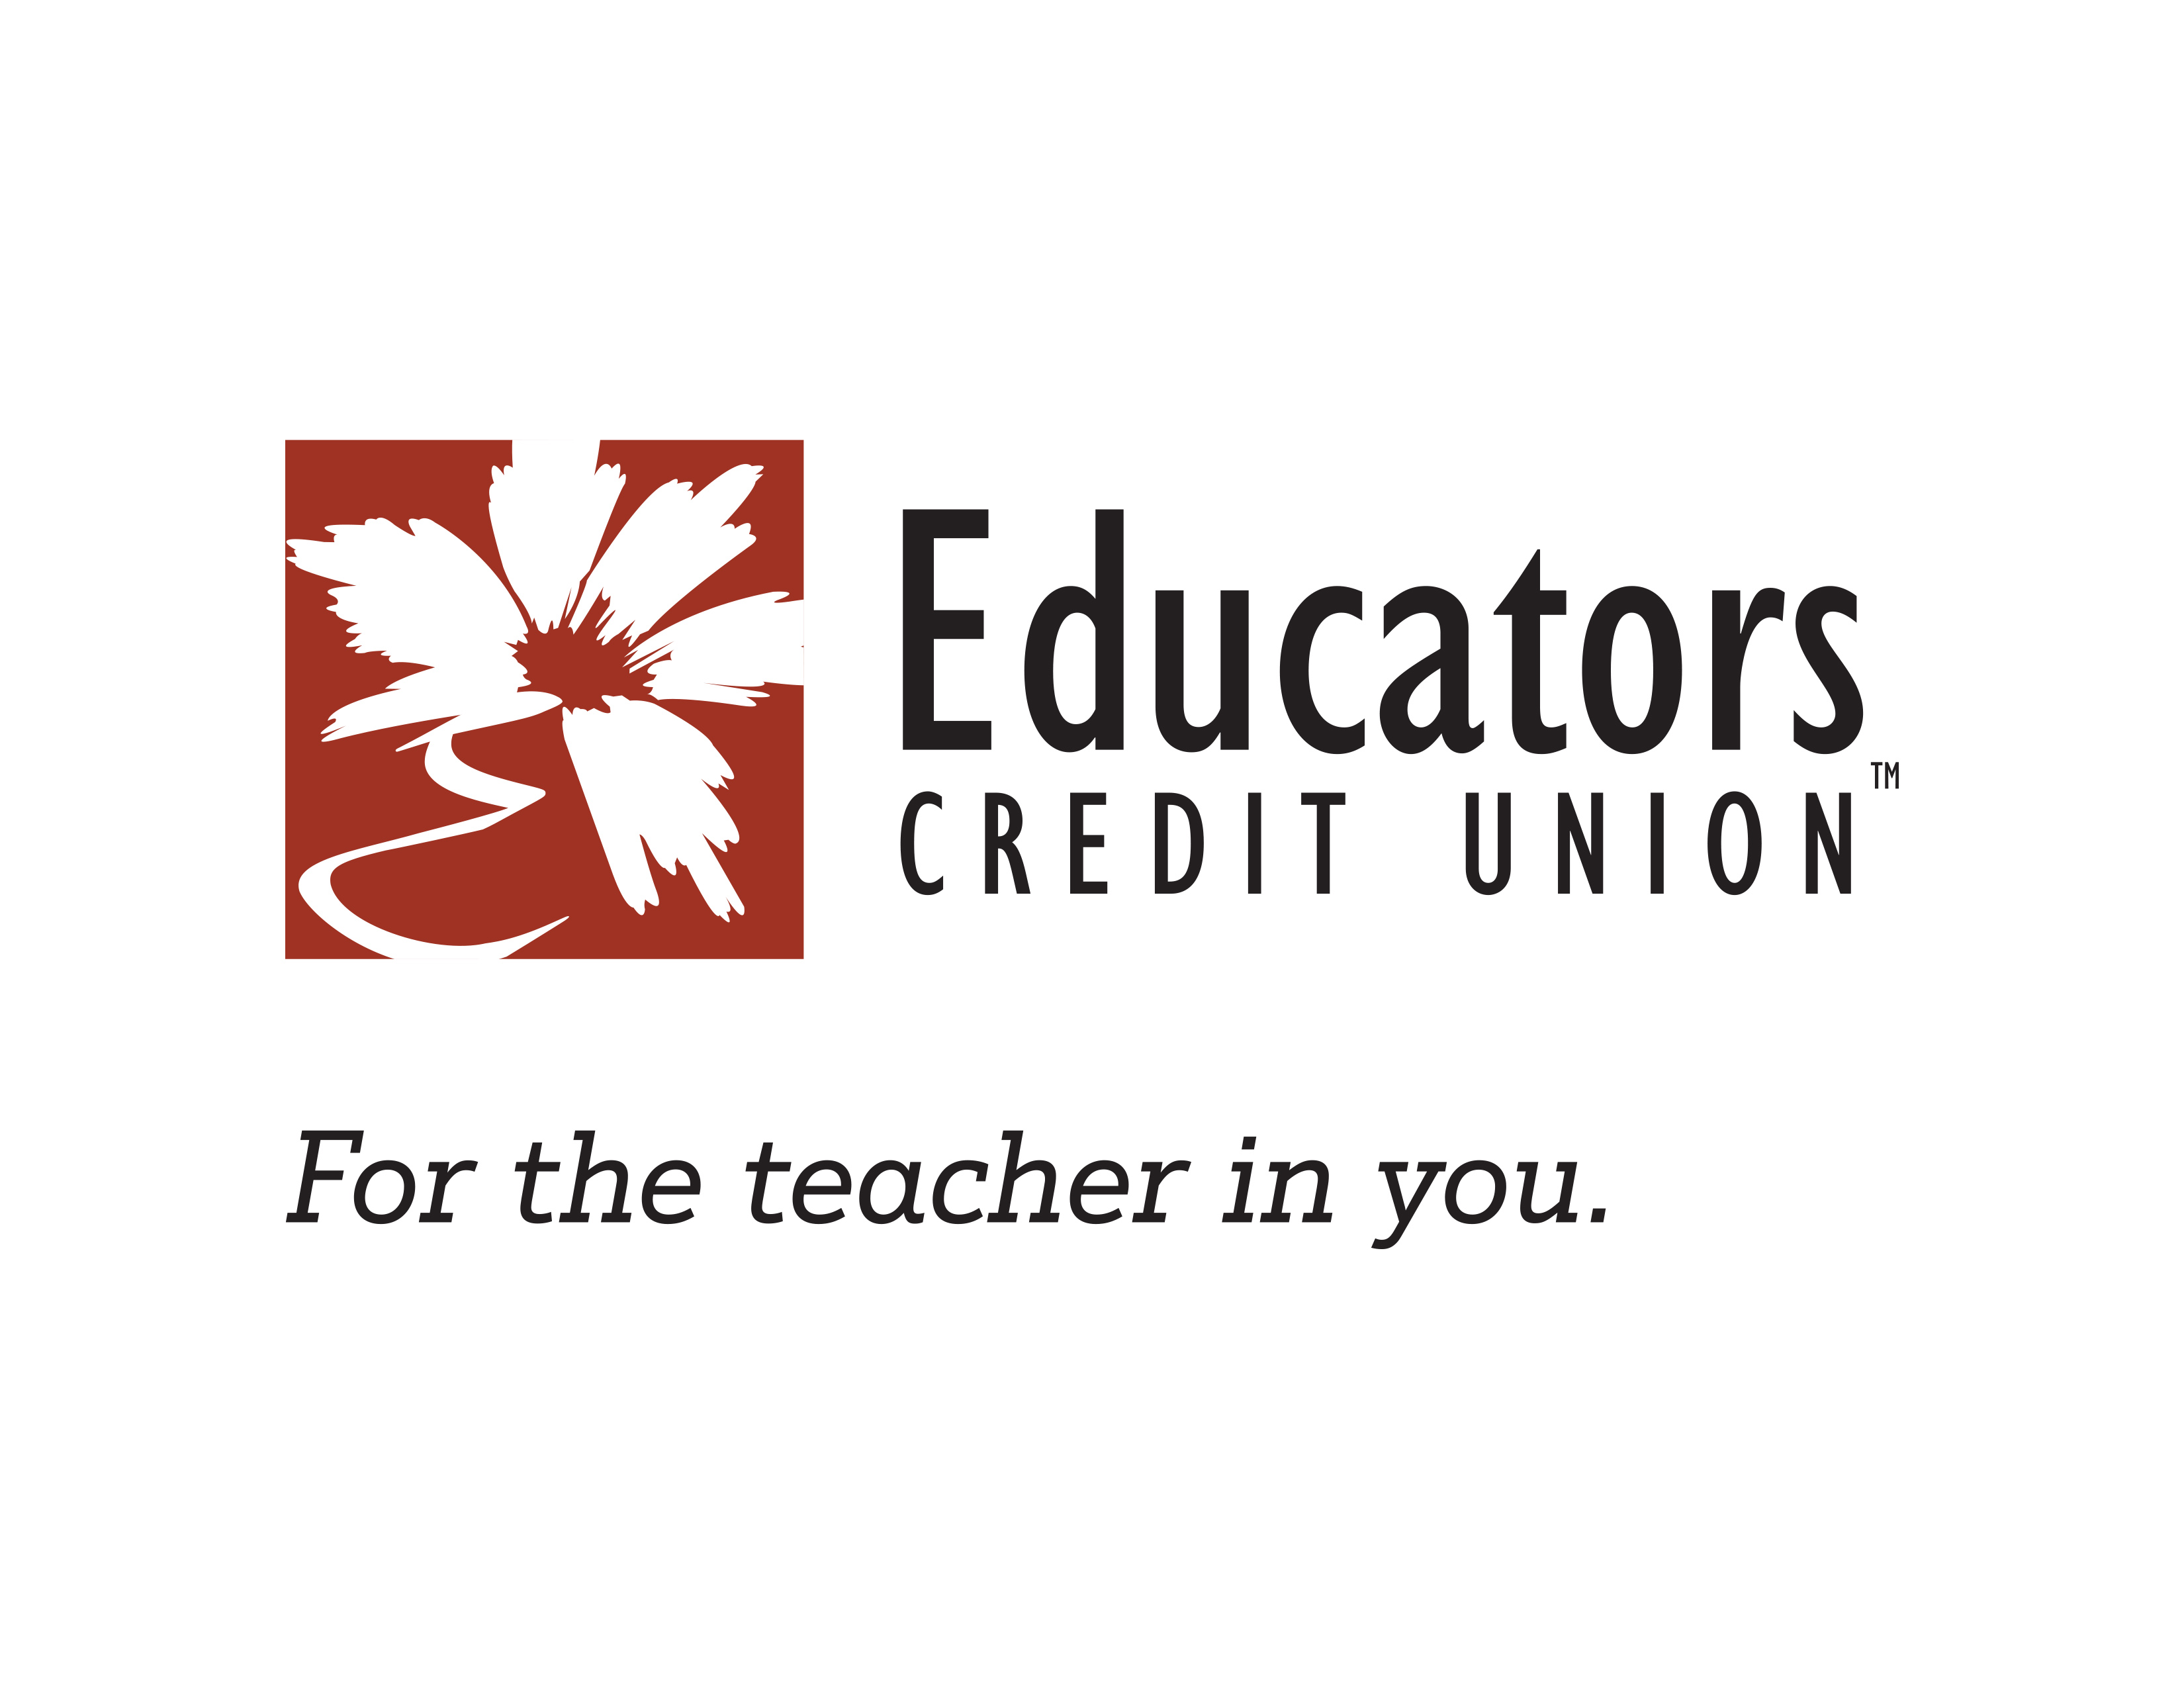 Educators Credit Union